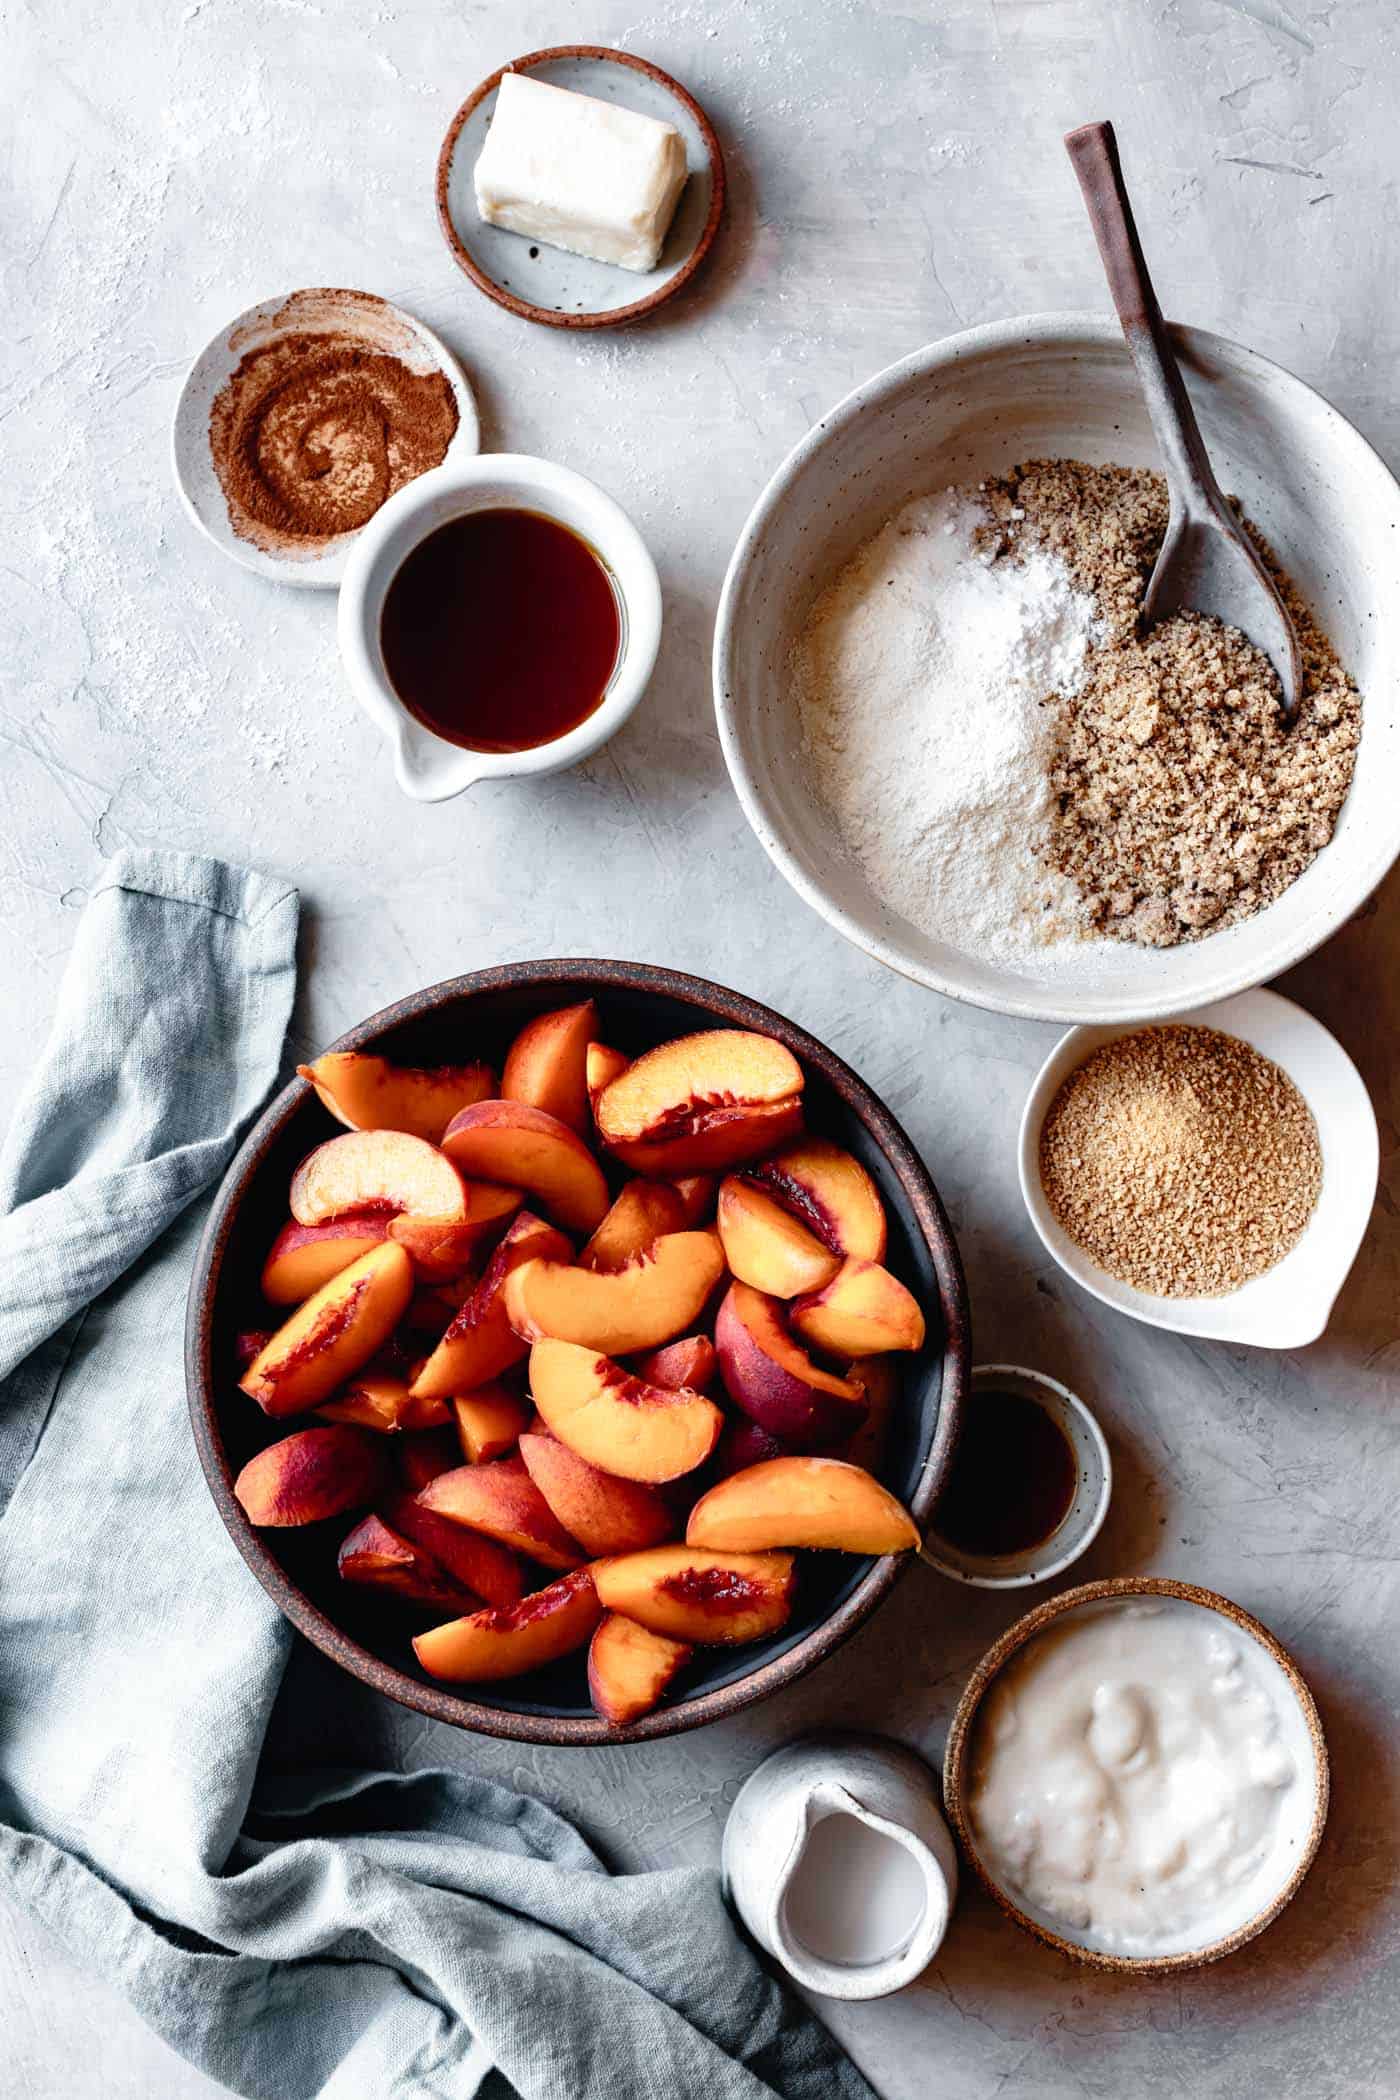 Ingredients for vegan paleo peach cobbler